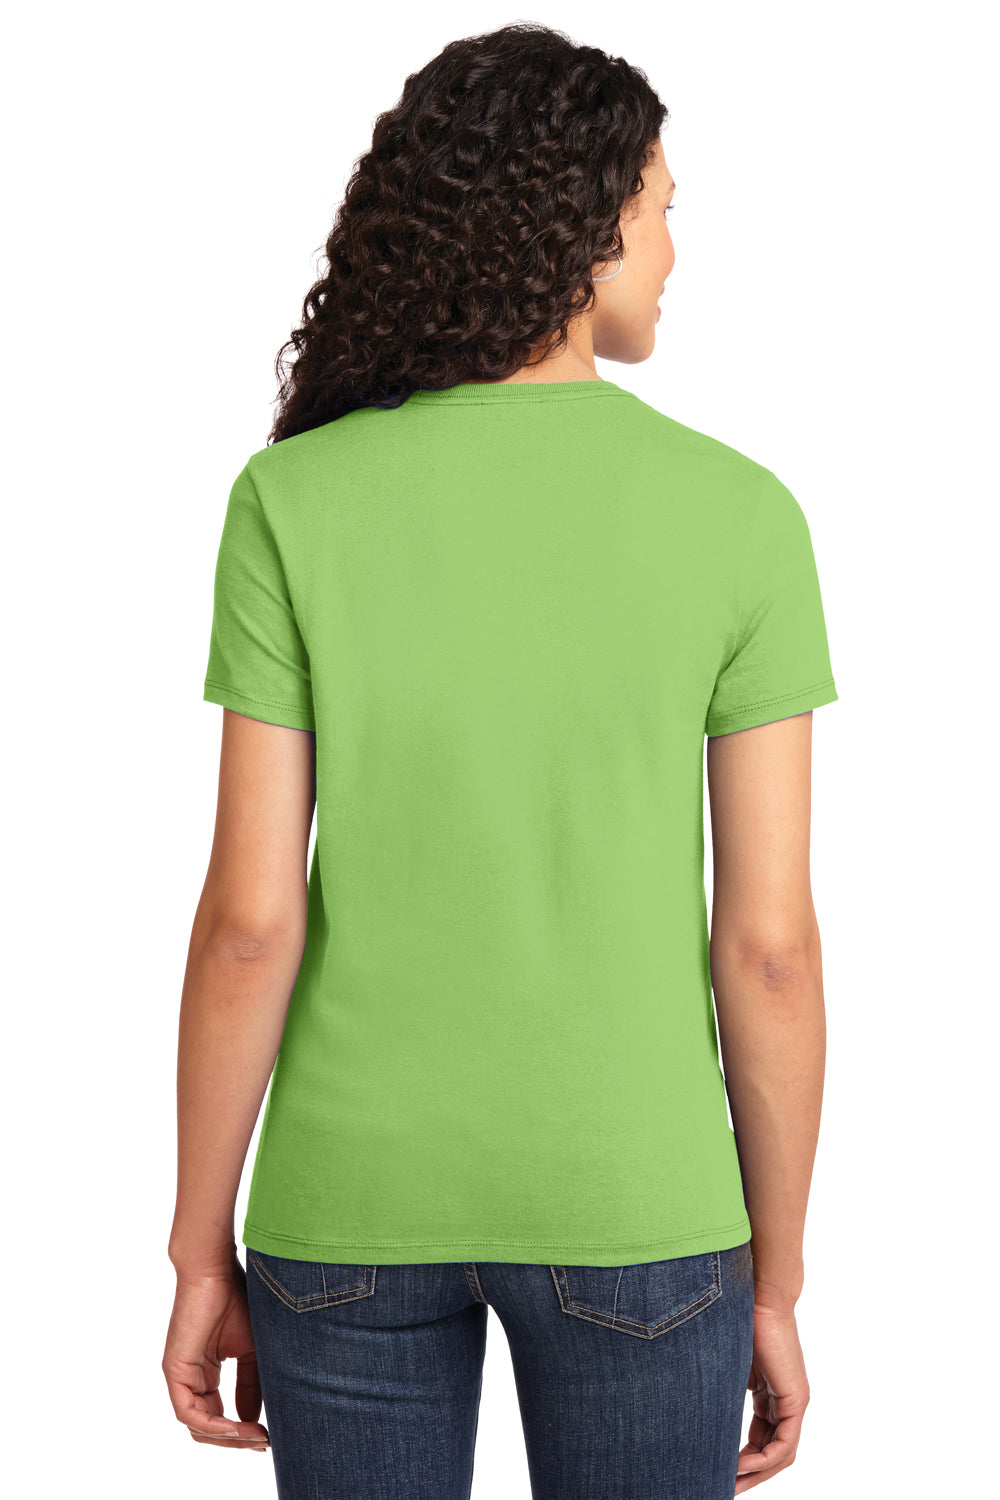 Port & Company LPC61 Womens Essential Short Sleeve Crewneck T-Shirt Lime Green Back